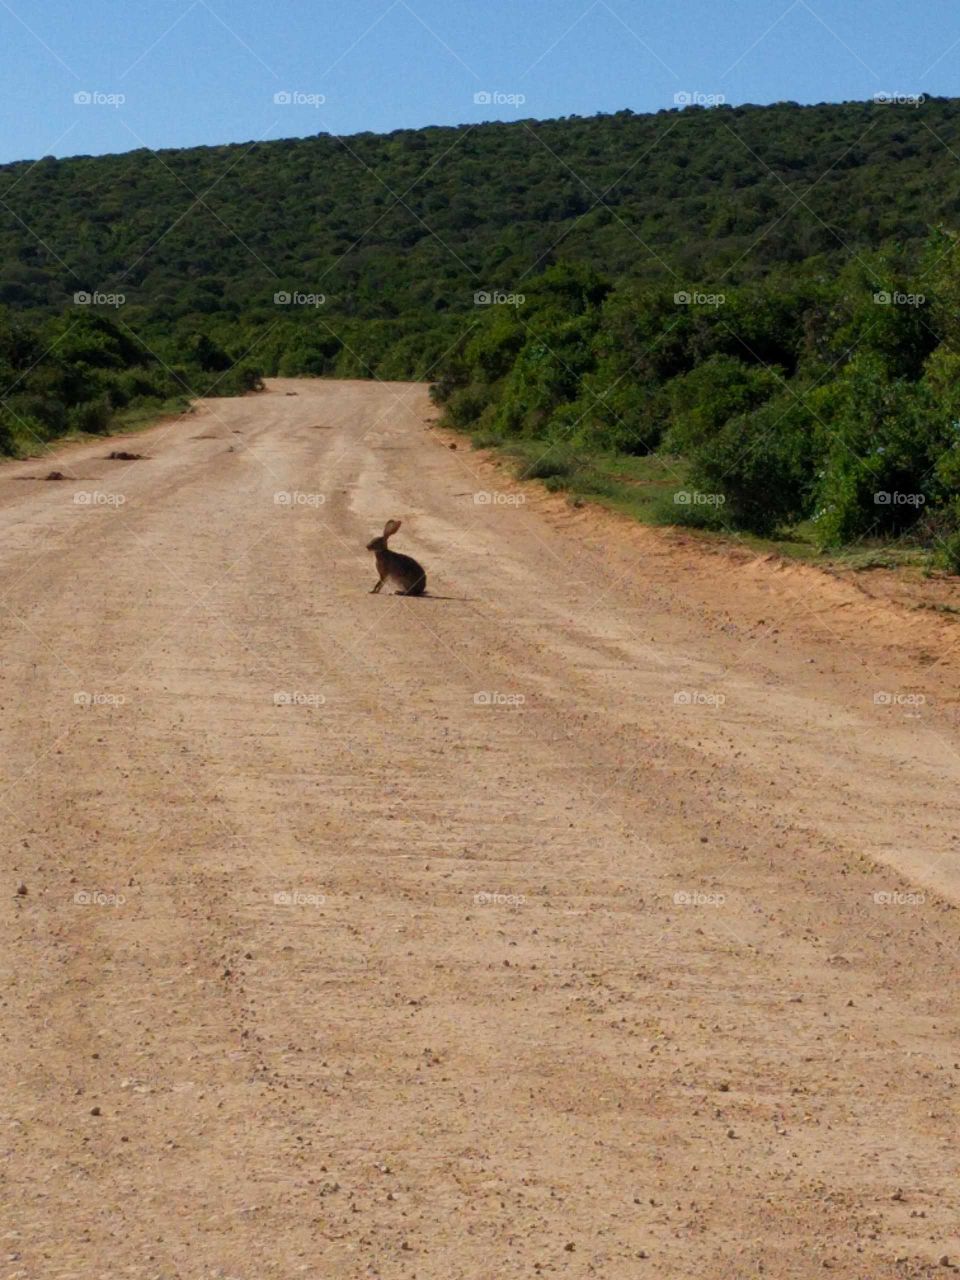 Safari in South Africa small hare